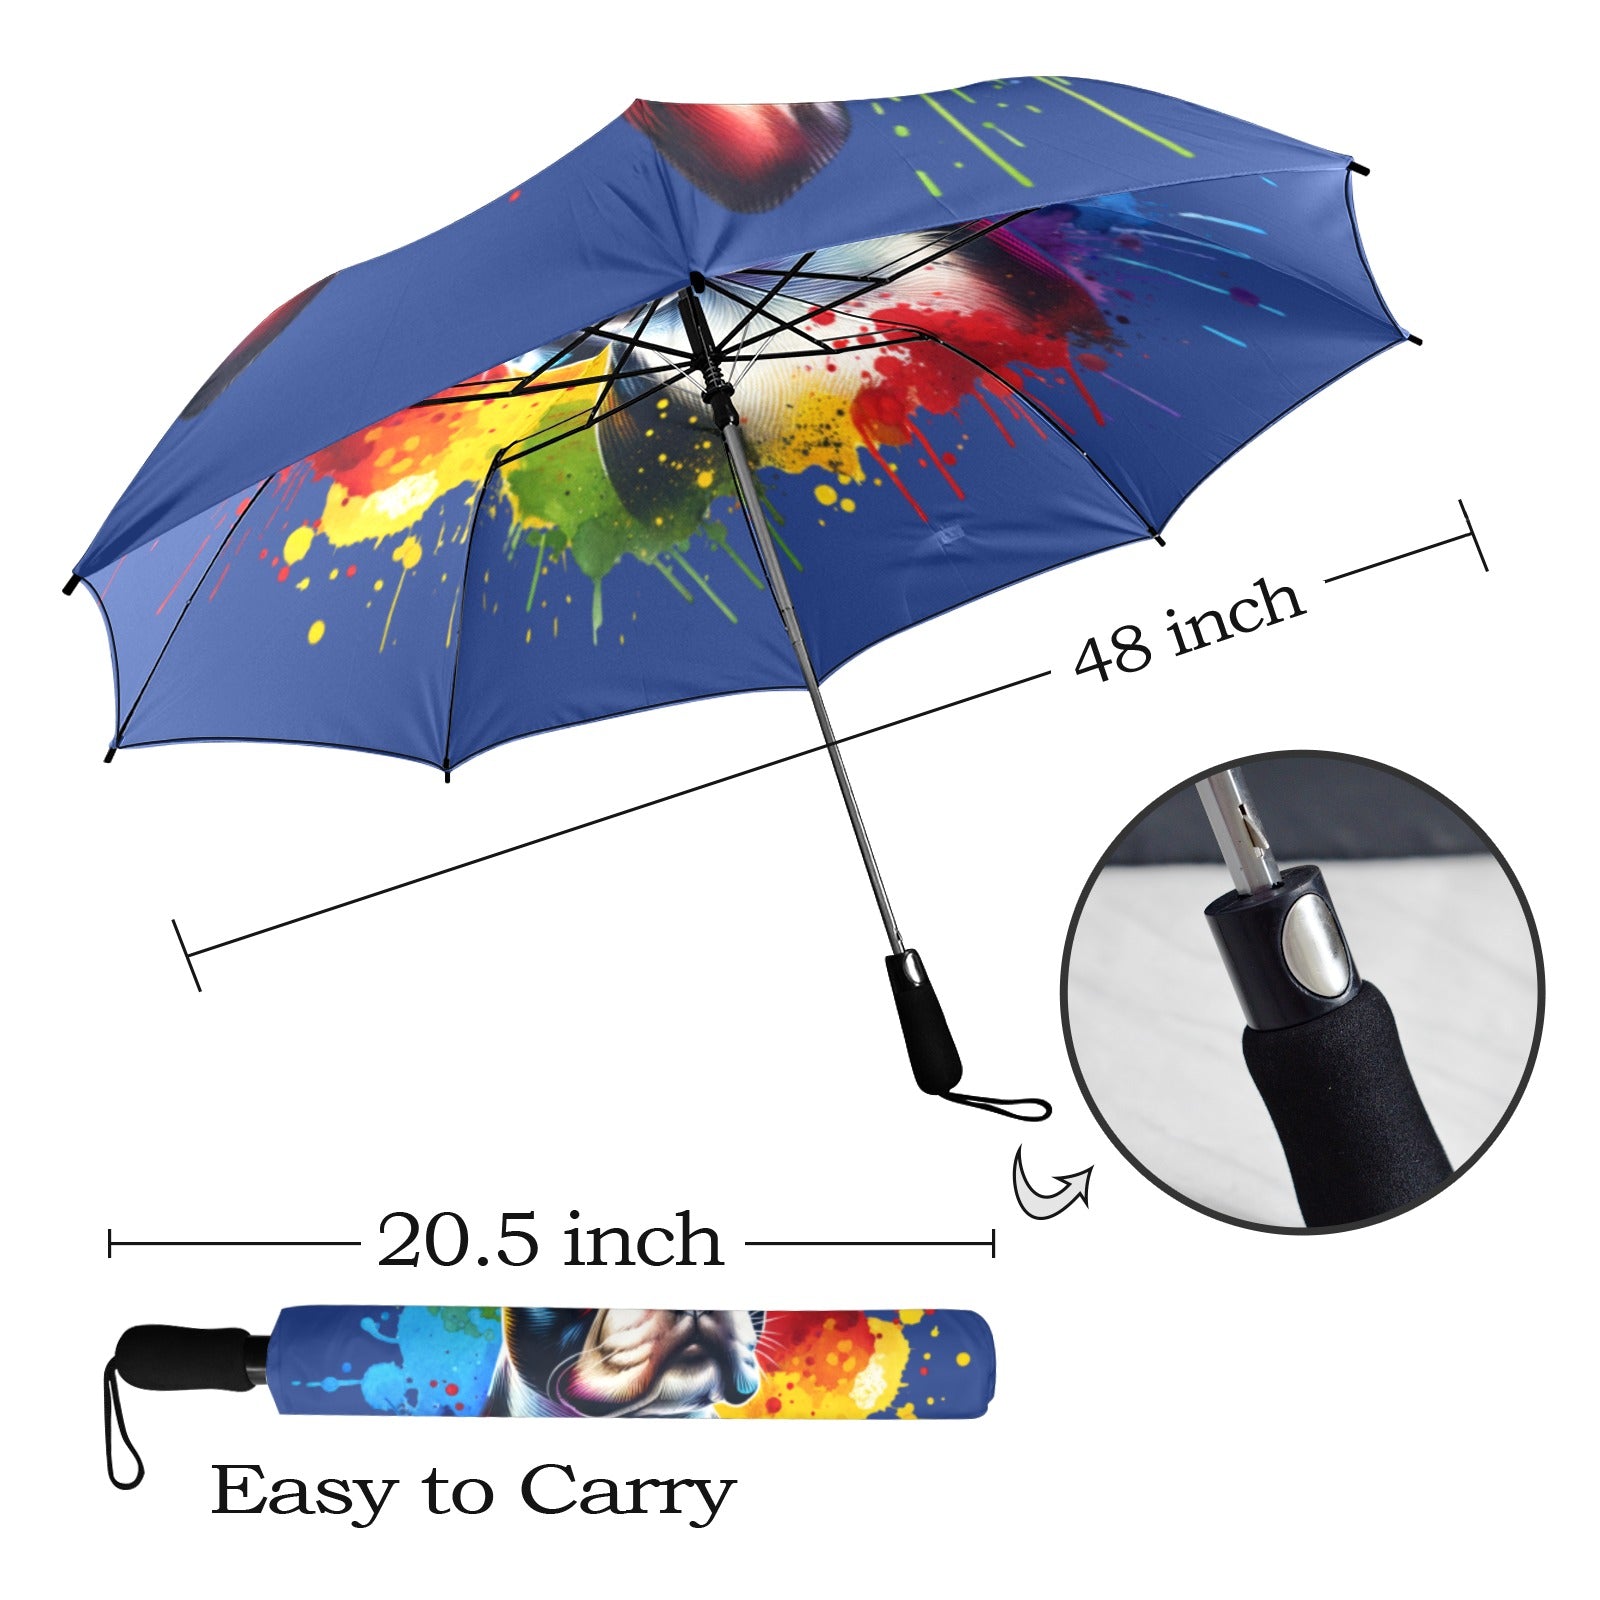 Boston Terrier Umbrella - Watercolor